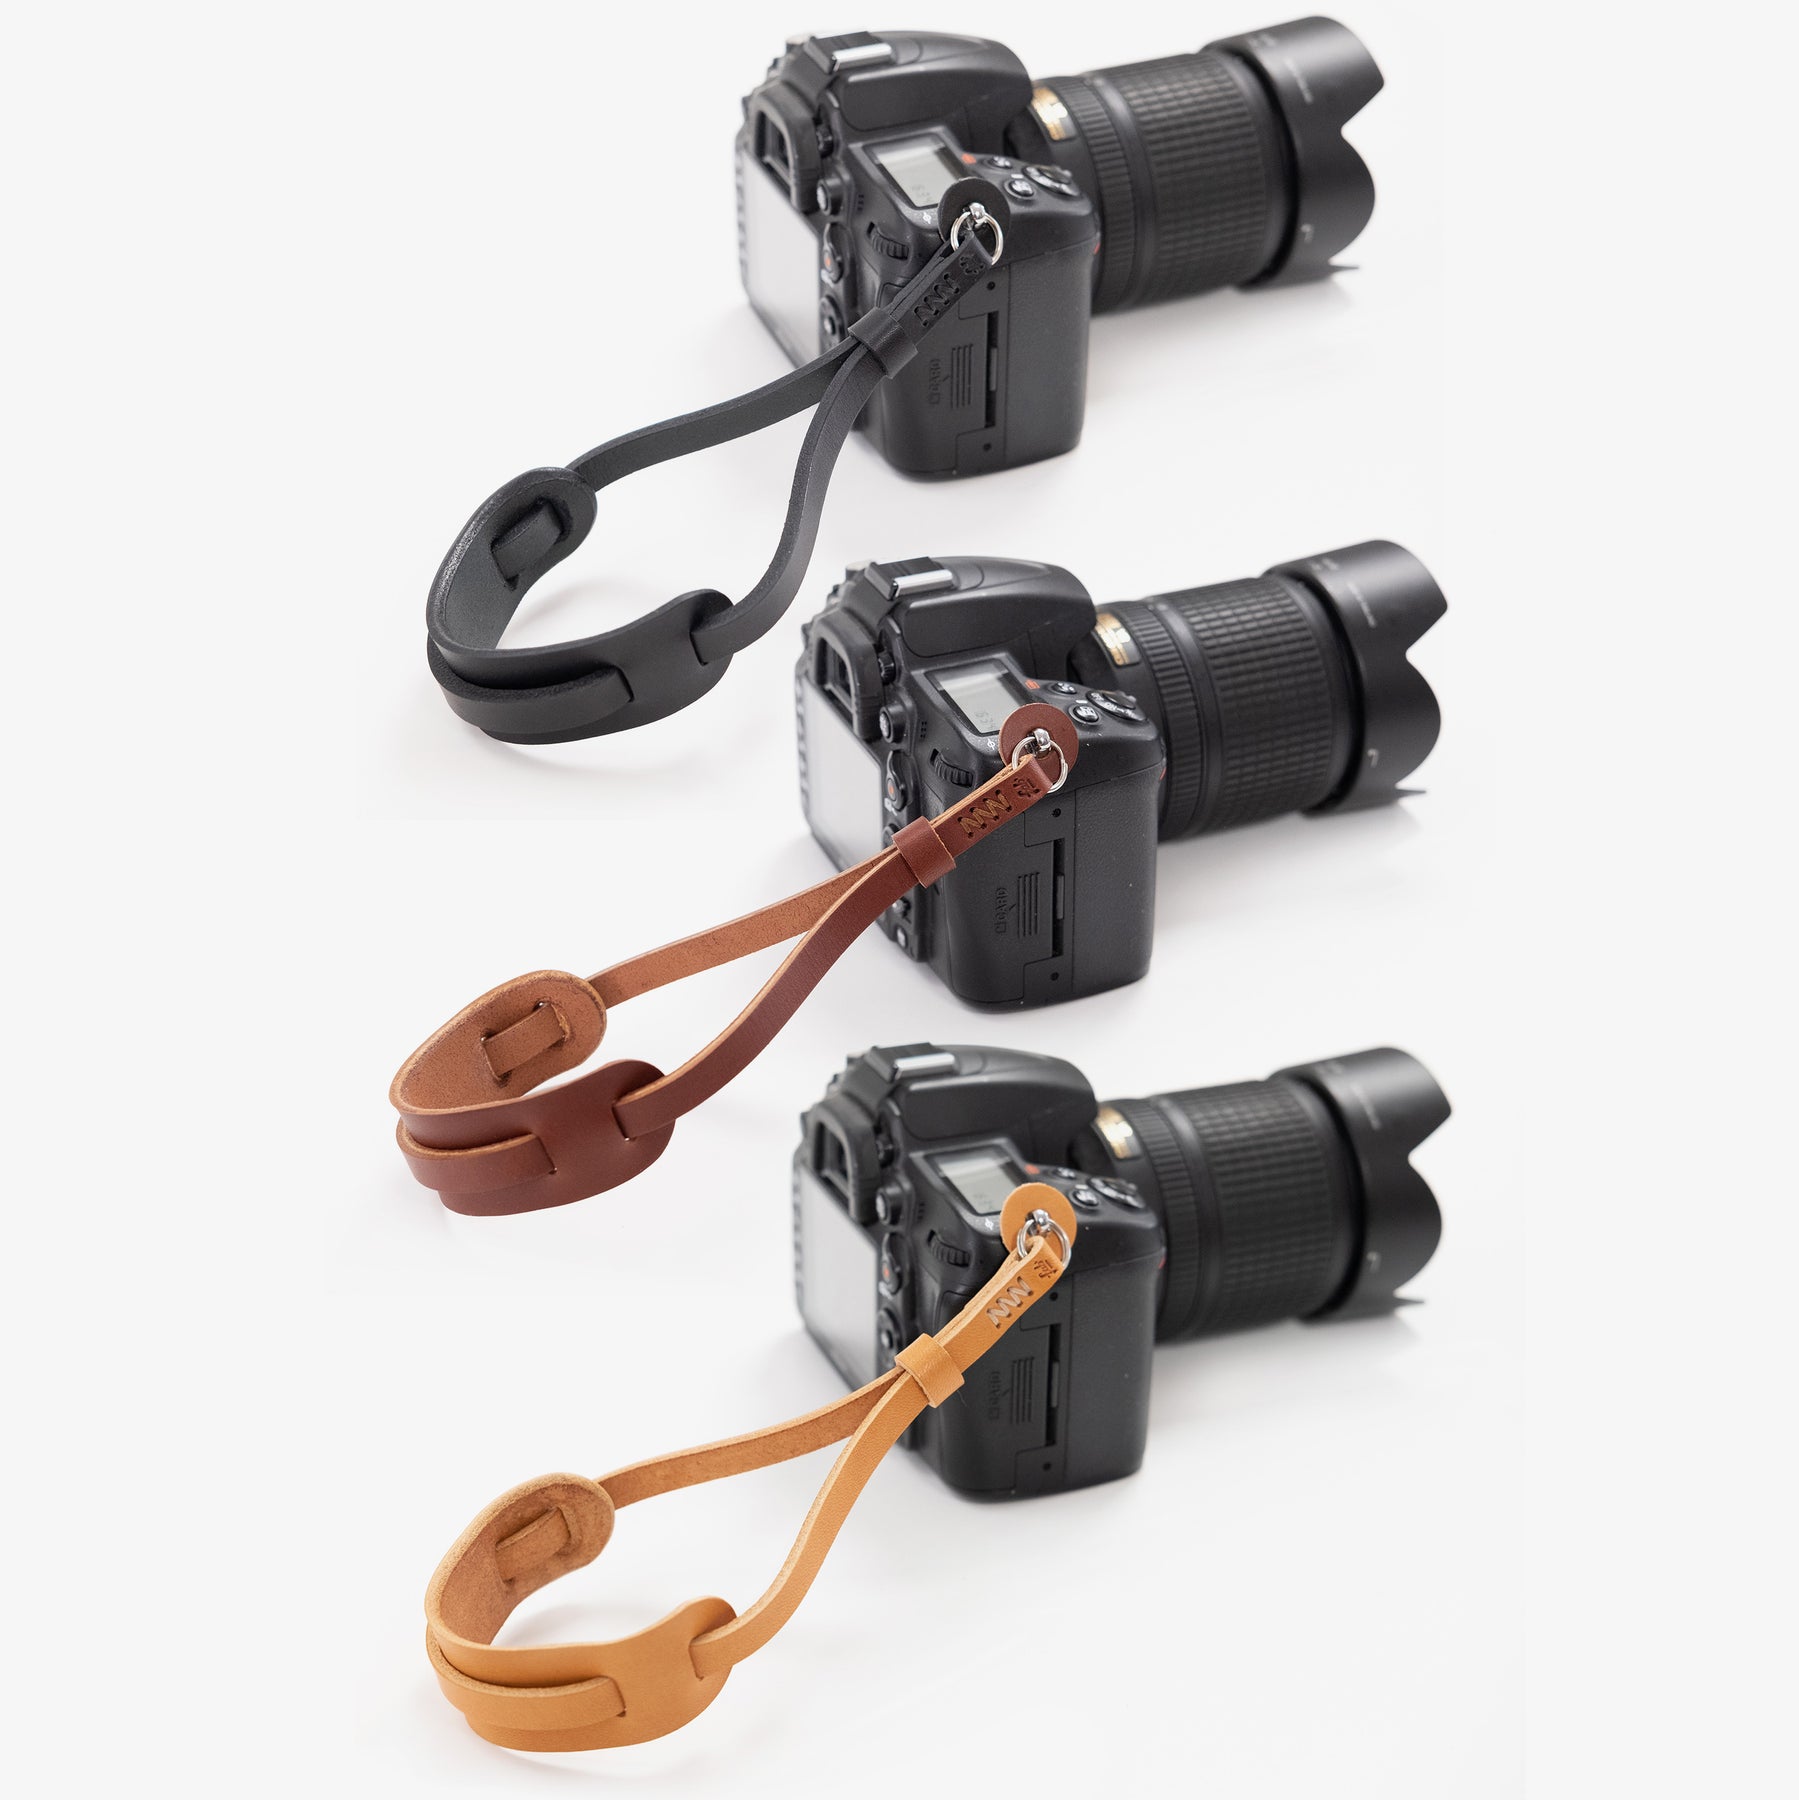 The F2.8 wrist camera strap